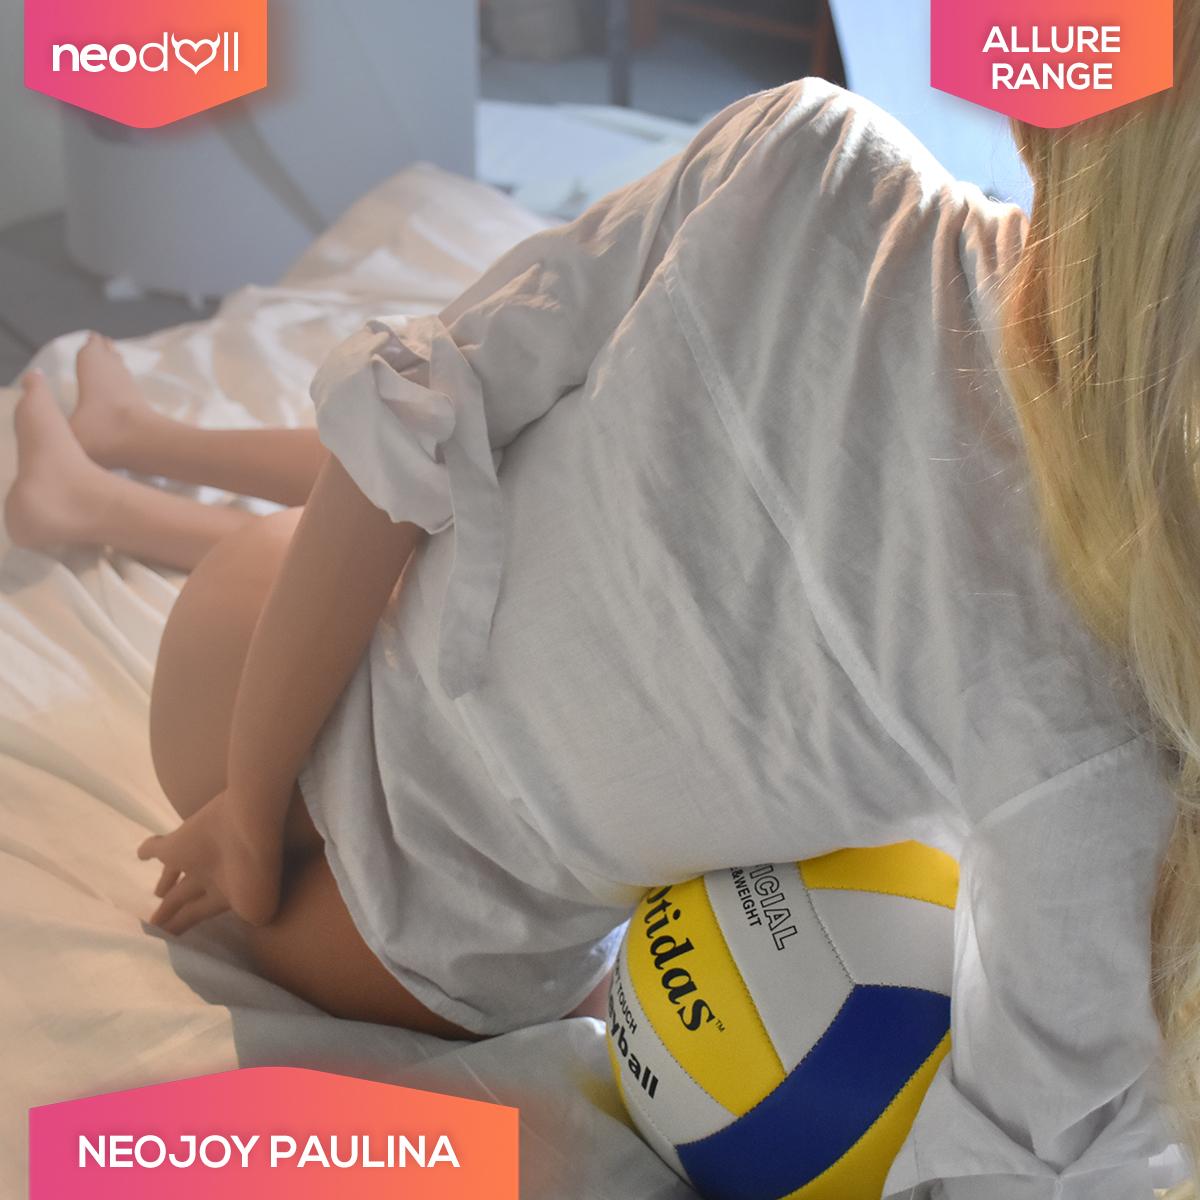 Neodoll Allure Paulina - Realistic Sex Doll -160cm